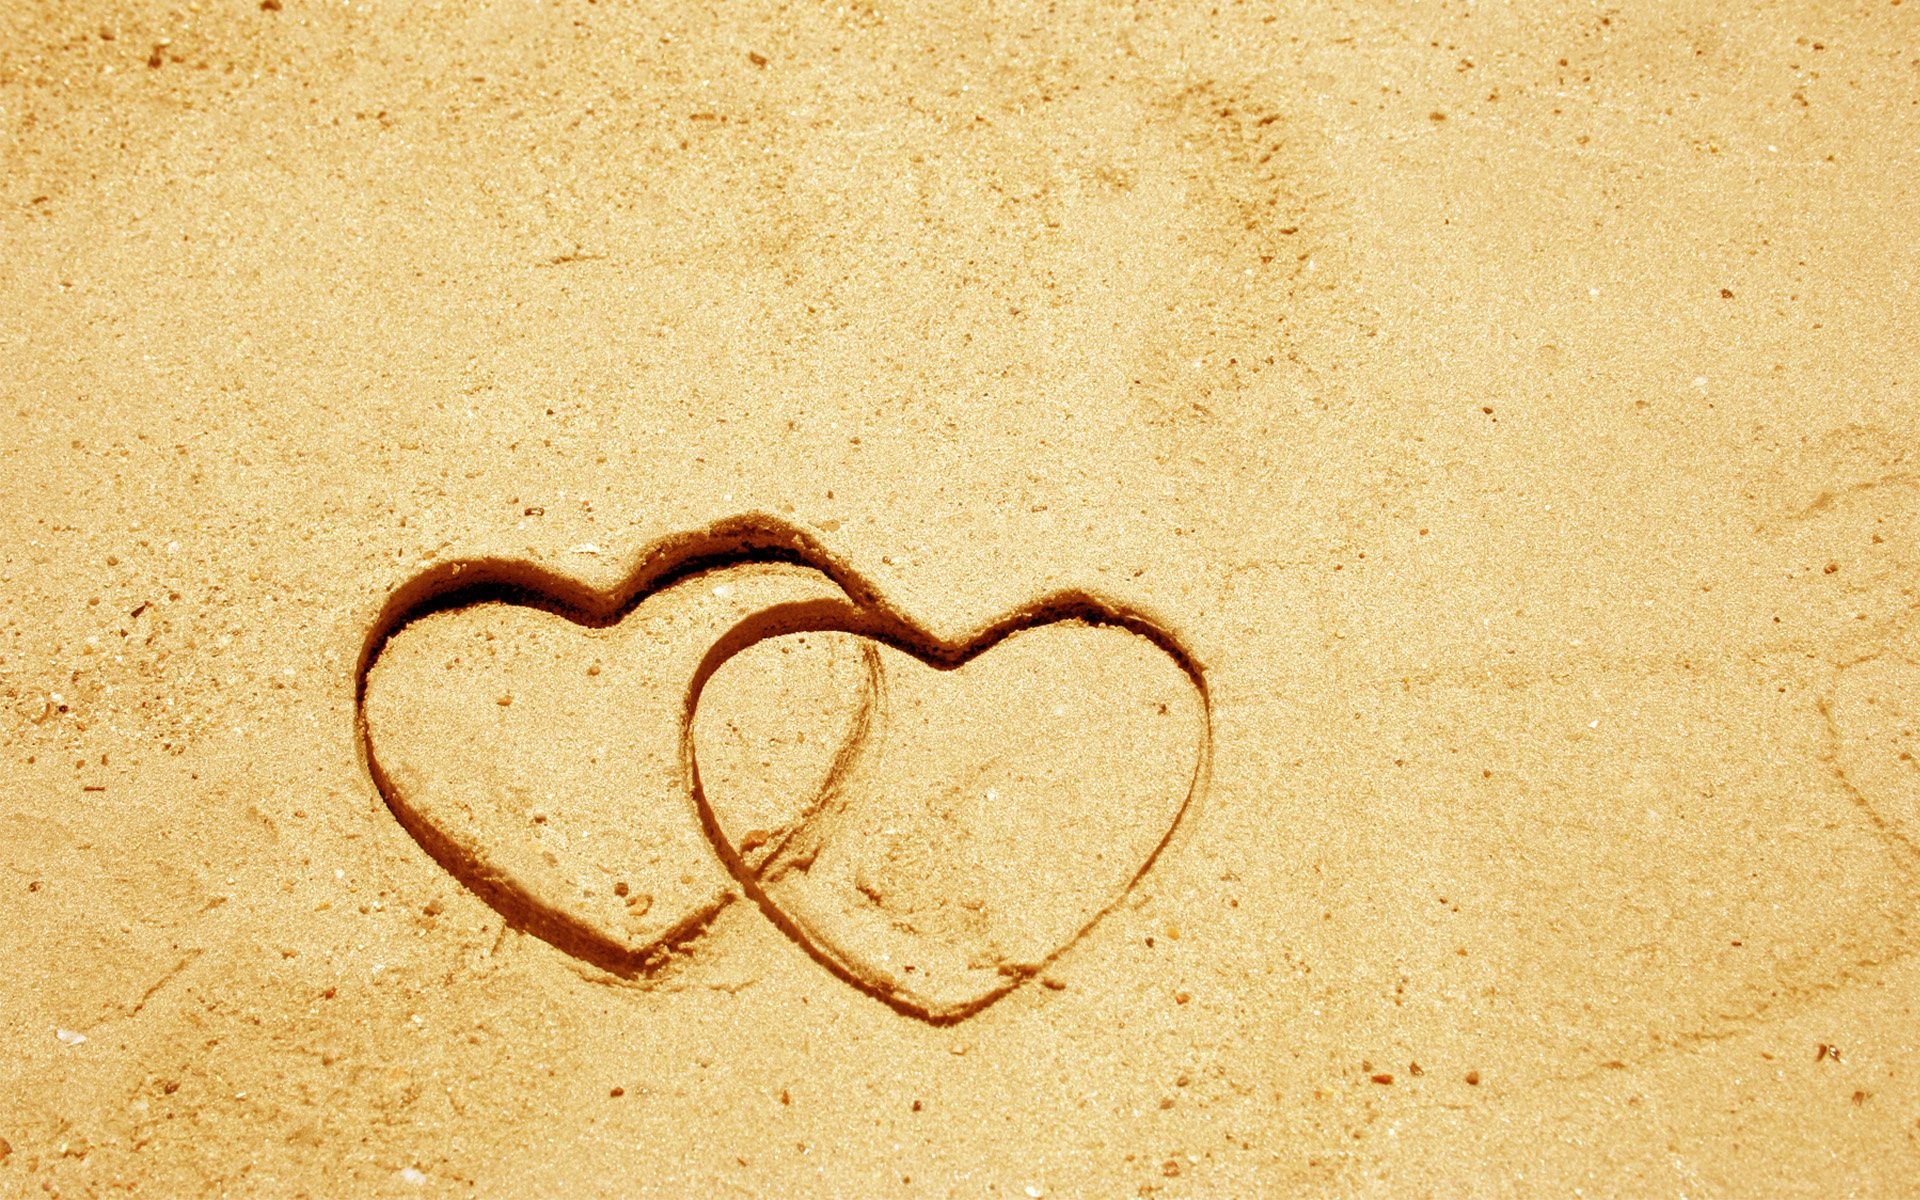 Обои на стол любовь. Фон сердечки. Фон любовь. Обои с сердечками. Сердце на песке.